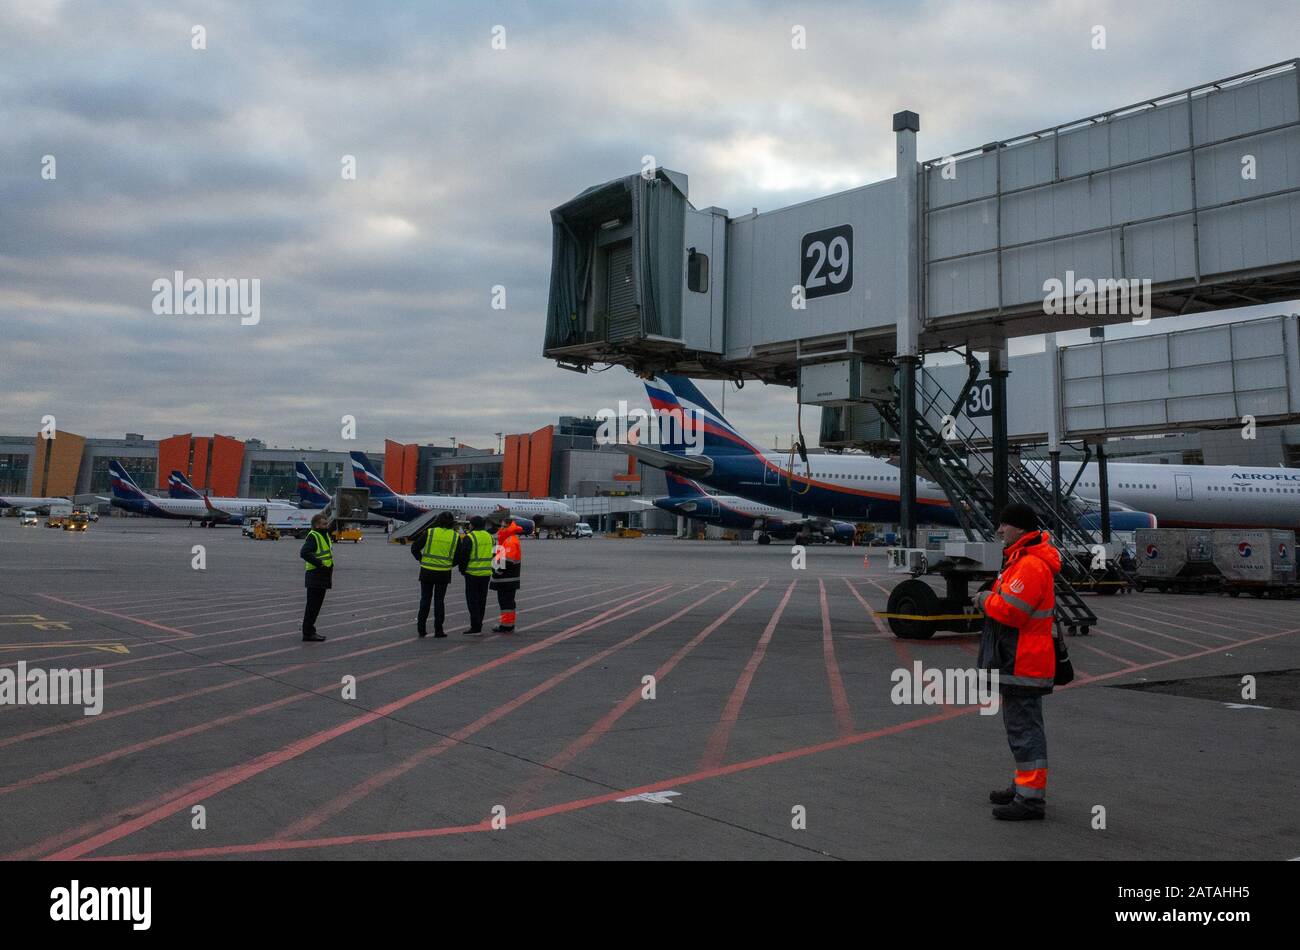 October 29 Moscow, Russia Passenger boarding bridge at Sheremetyevo International Airport. Stock Photo